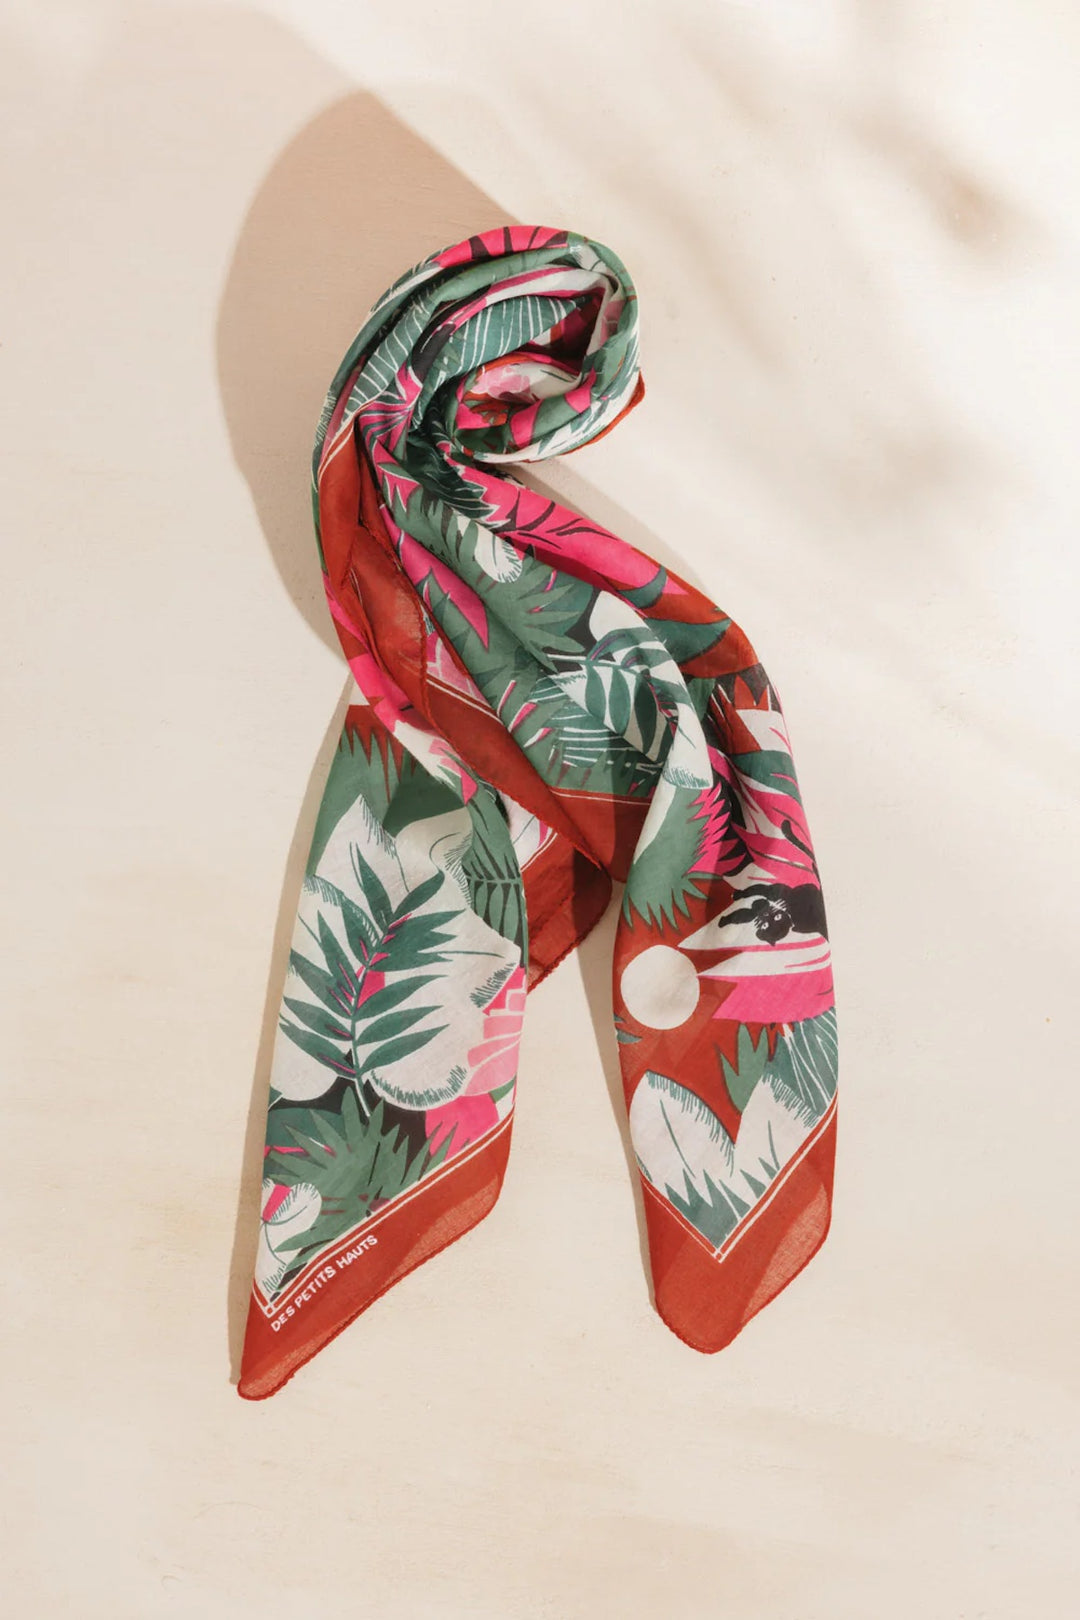 Flower print scarf